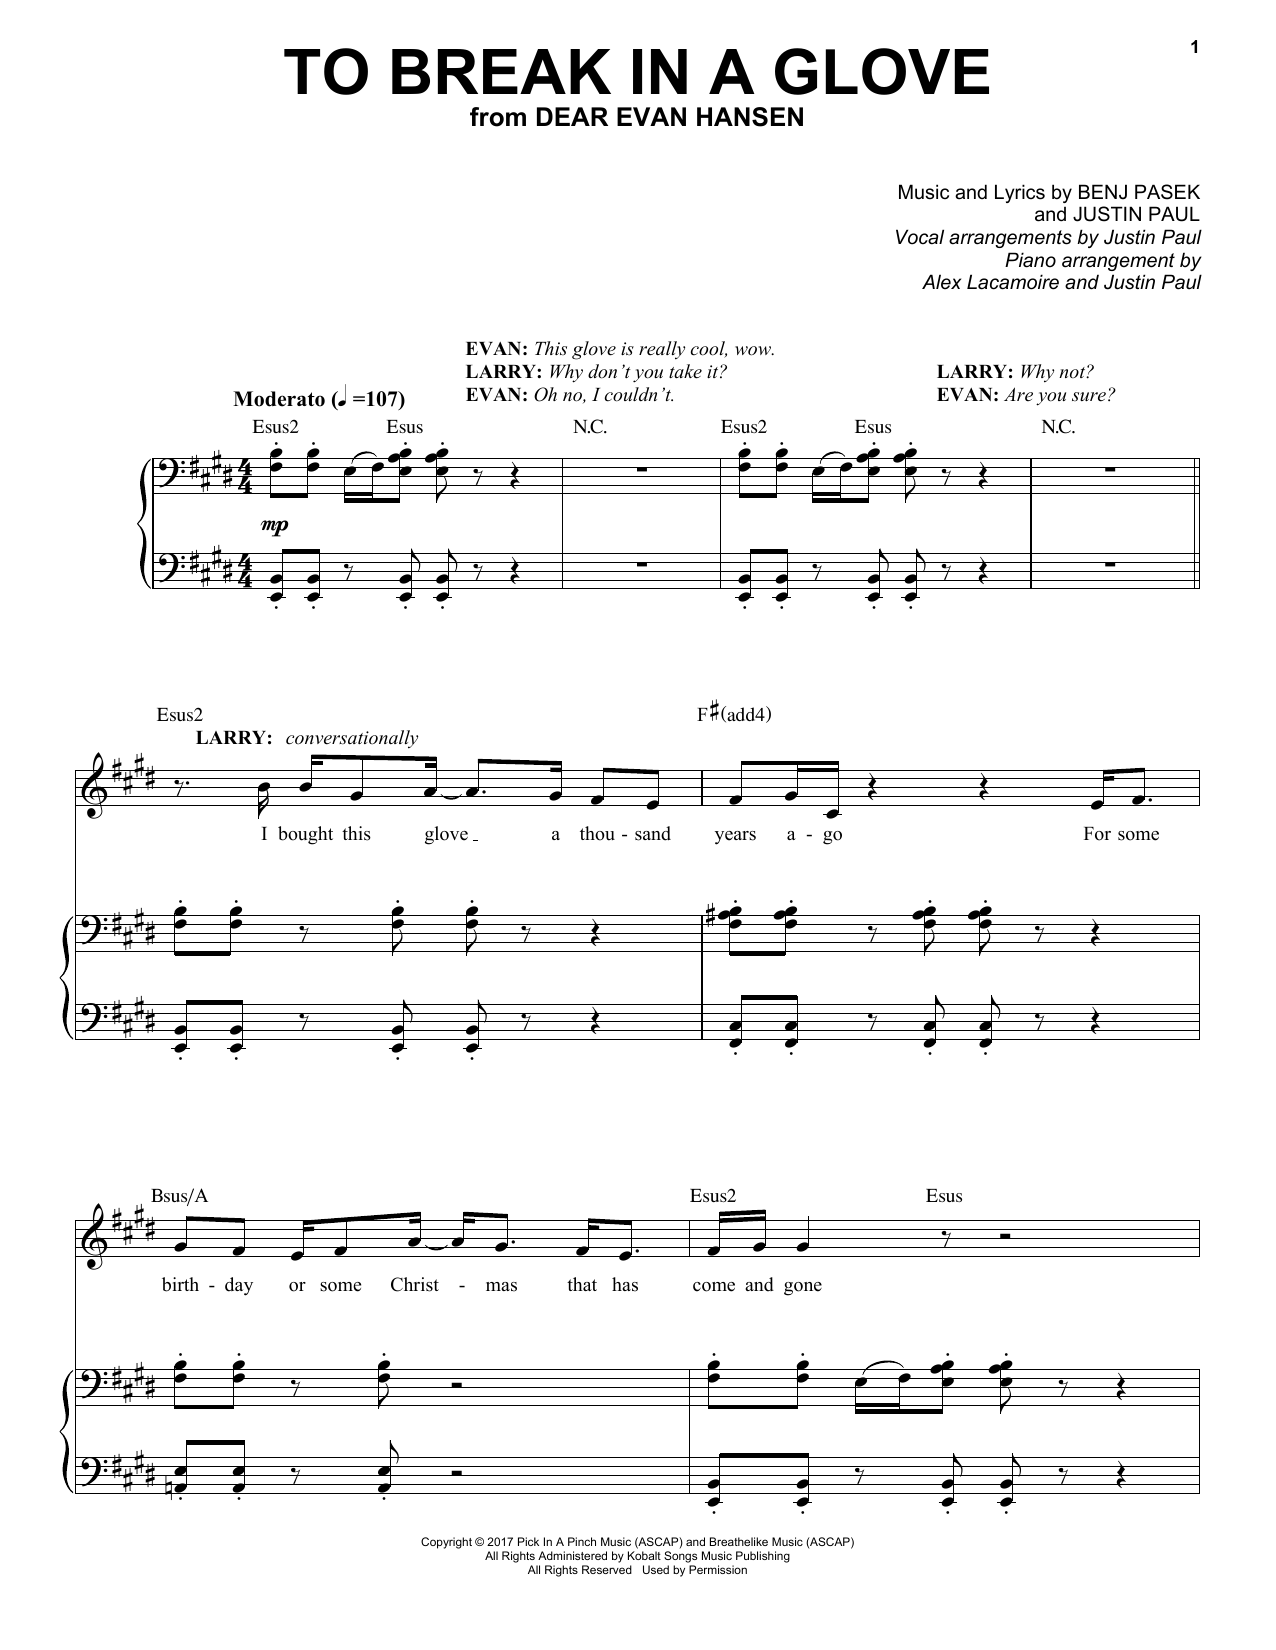 Pasek & Paul To Break In A Glove (from Dear Evan Hansen) Sheet Music Notes & Chords for Guitar Chords/Lyrics - Download or Print PDF